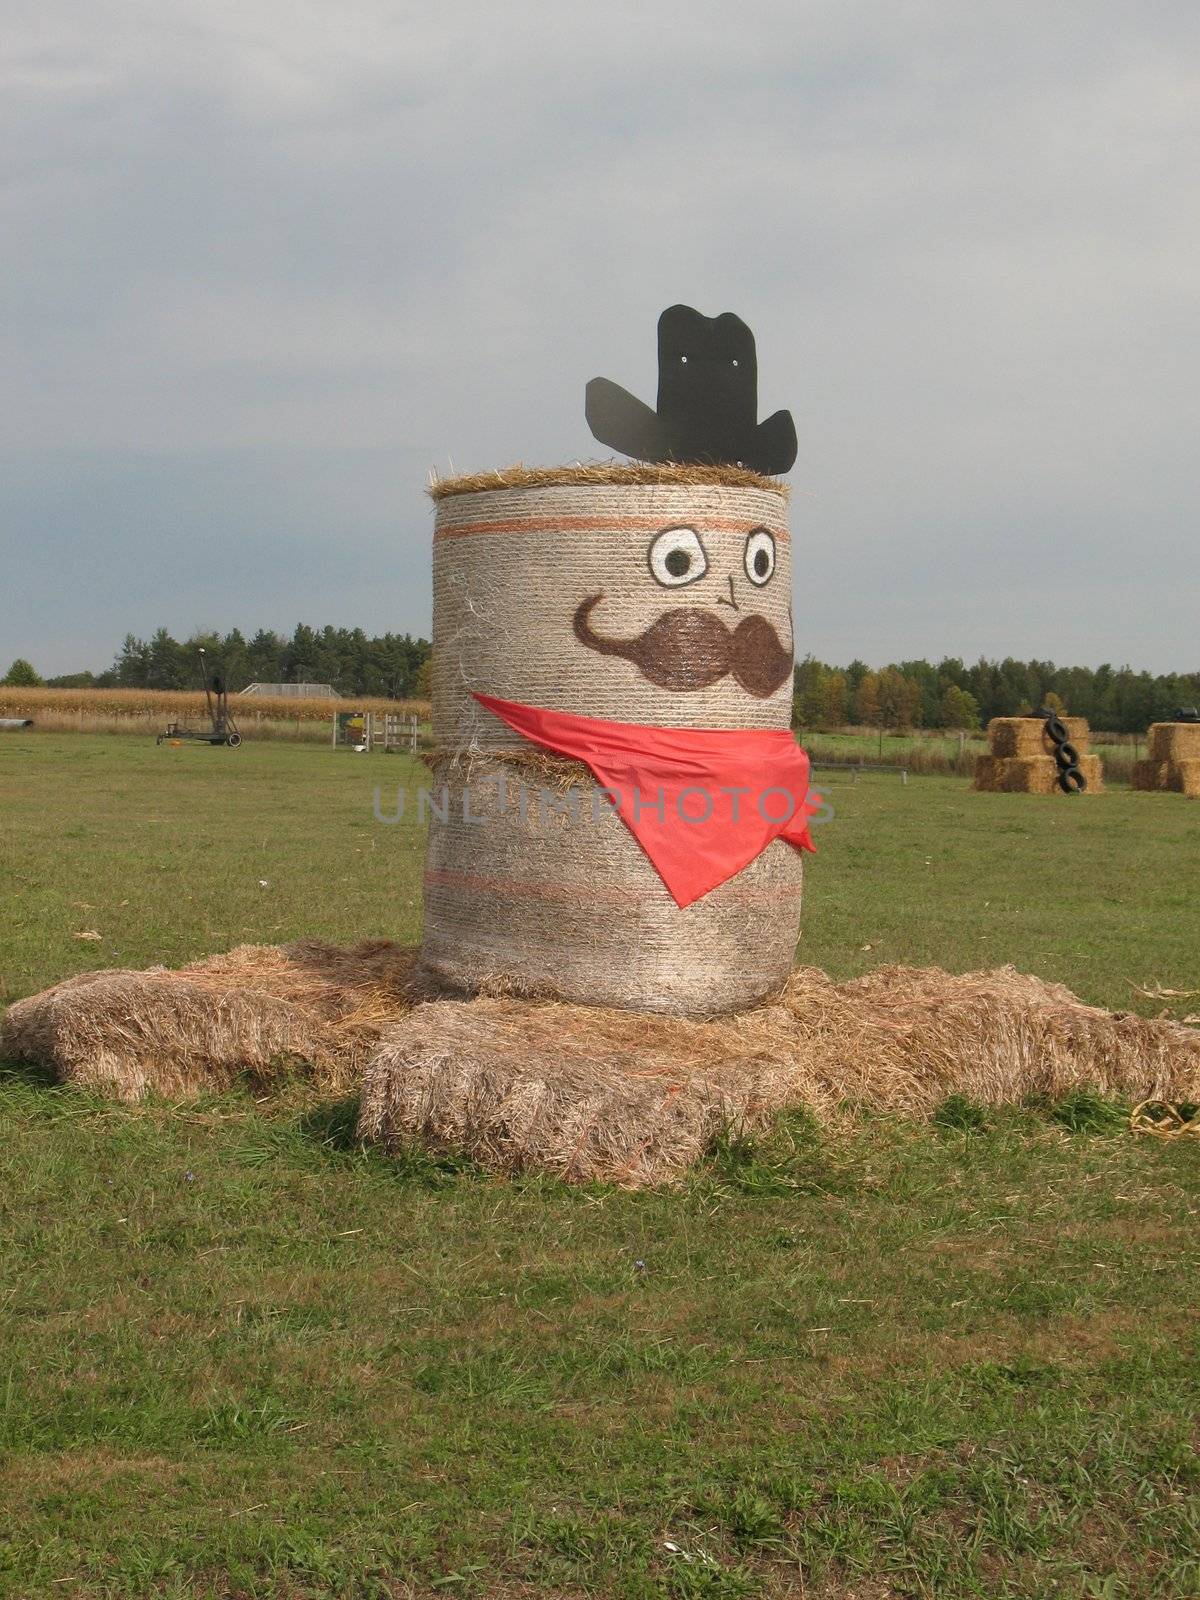 Hallowe'en figure made of rolls of hay at farm.